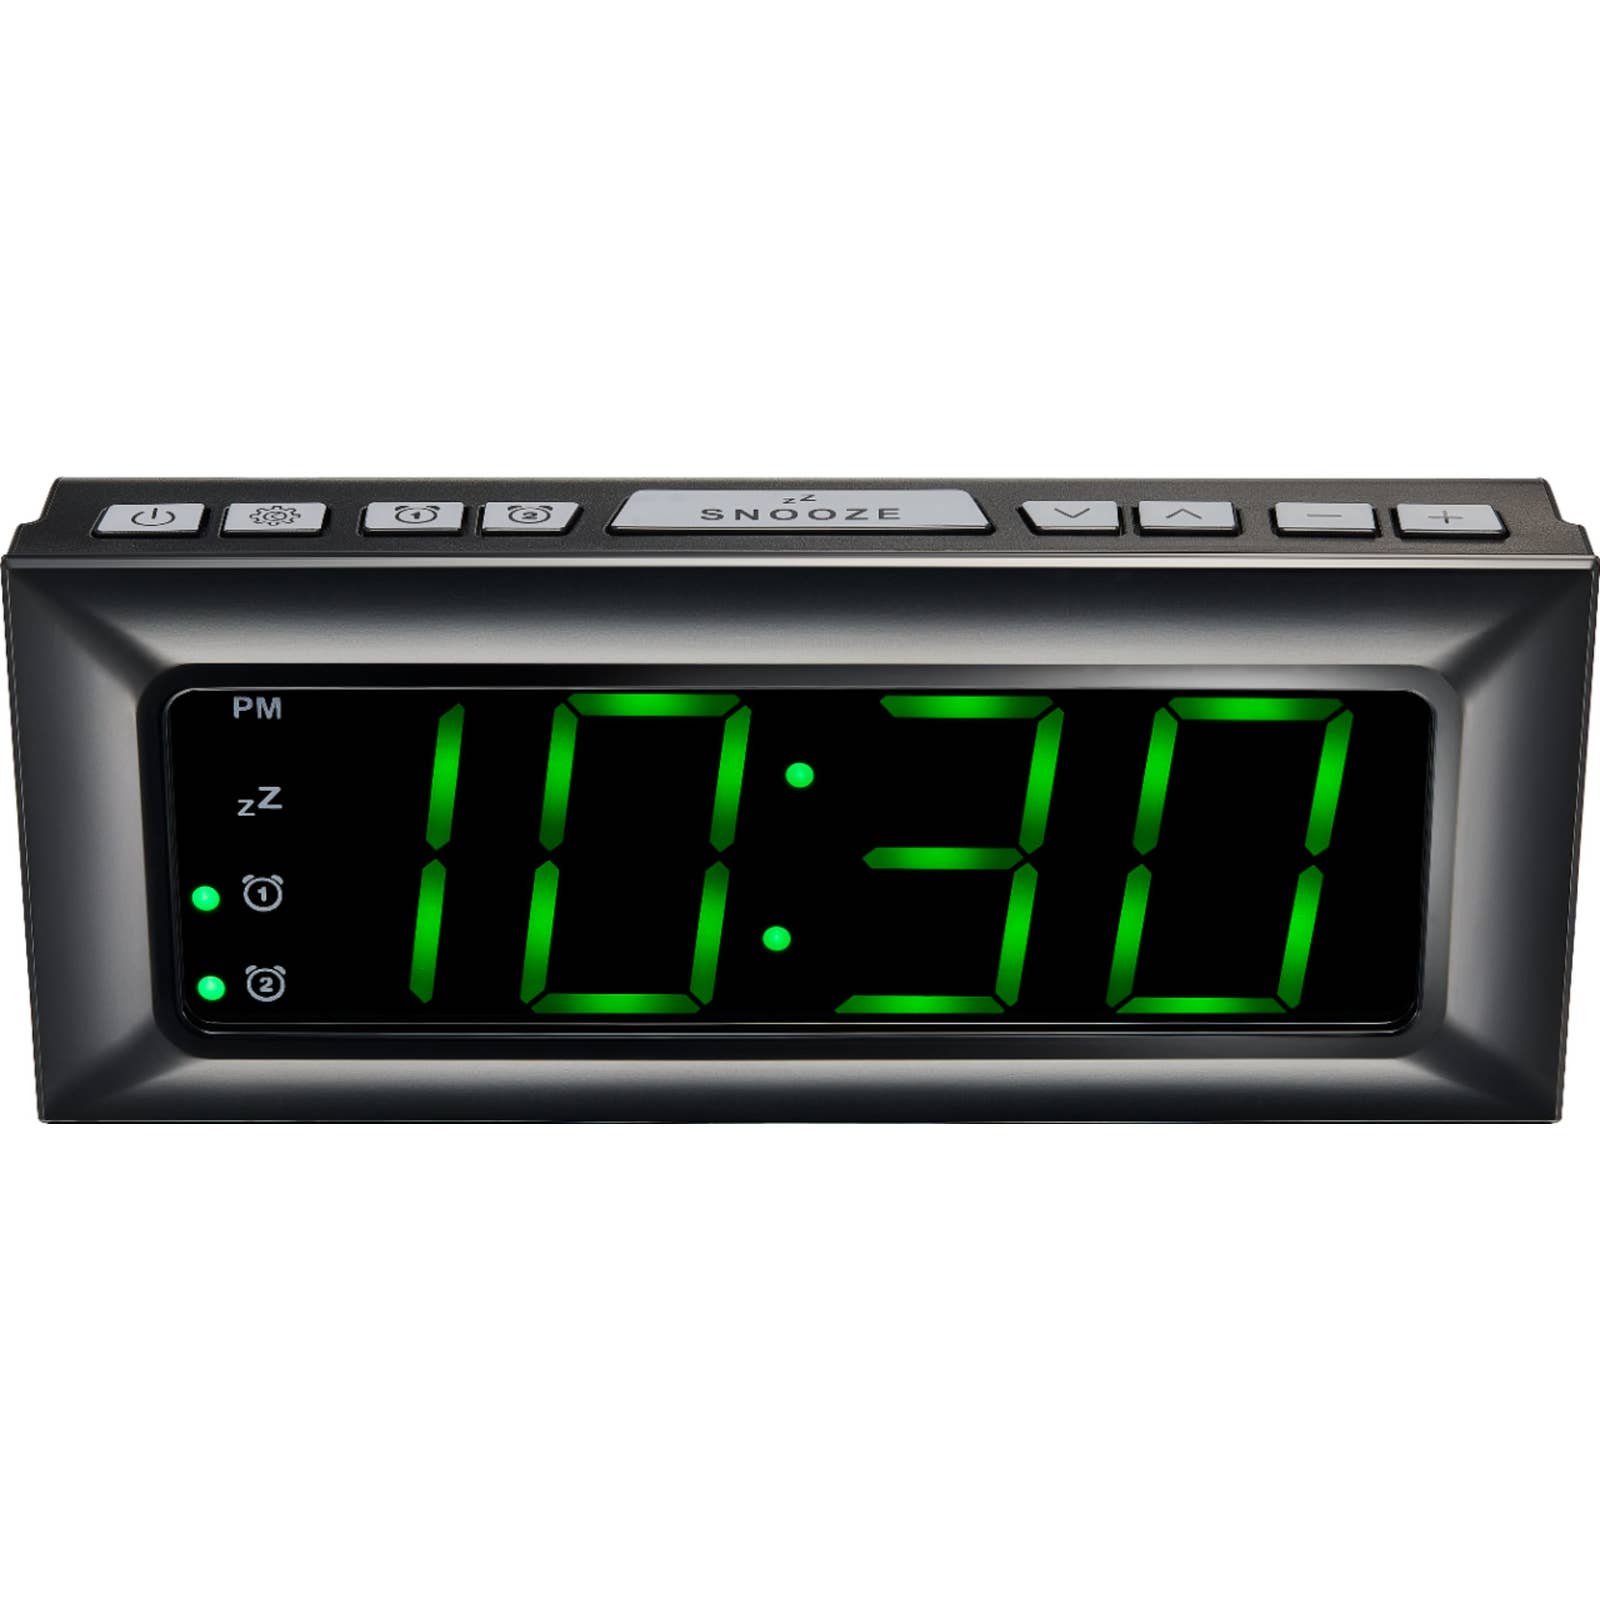 Best Buy essentials™ - BE-CLOPP3 Digital AM / FM Dual Alarm Clock - Black